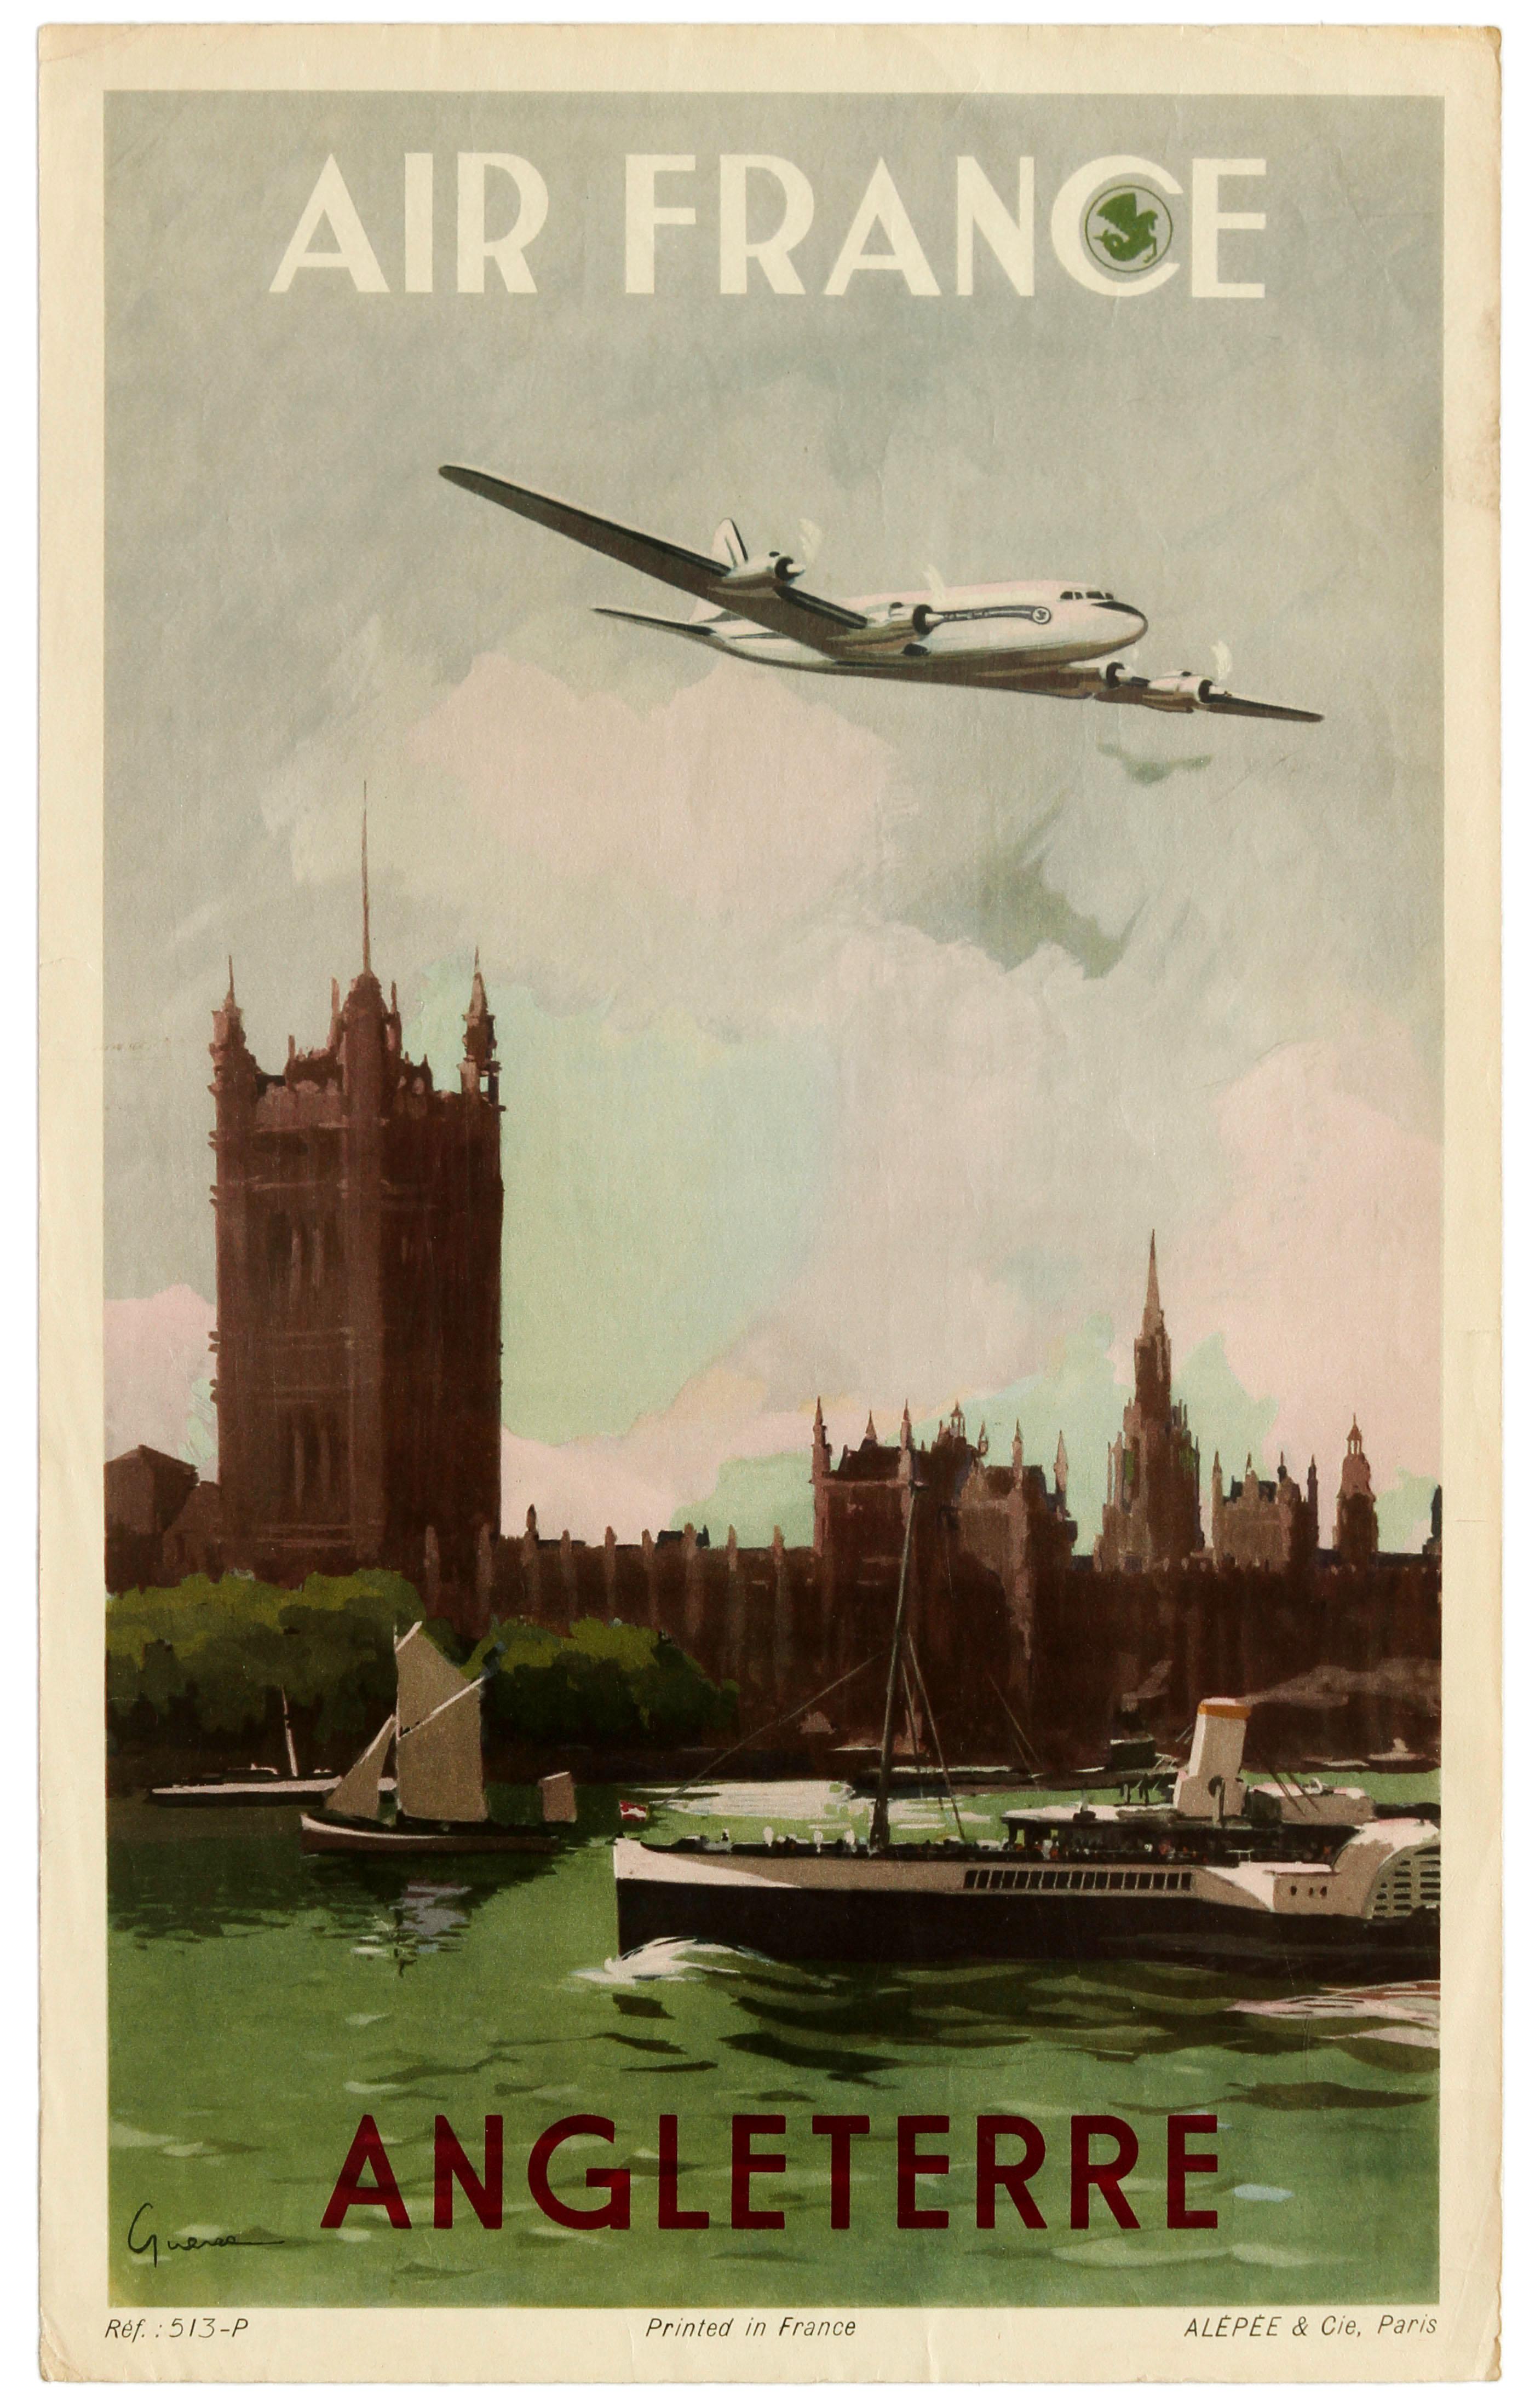 Vincent Guerra Print - Original Vintage Poster Air France Angleterre England London Travel Art Affiche